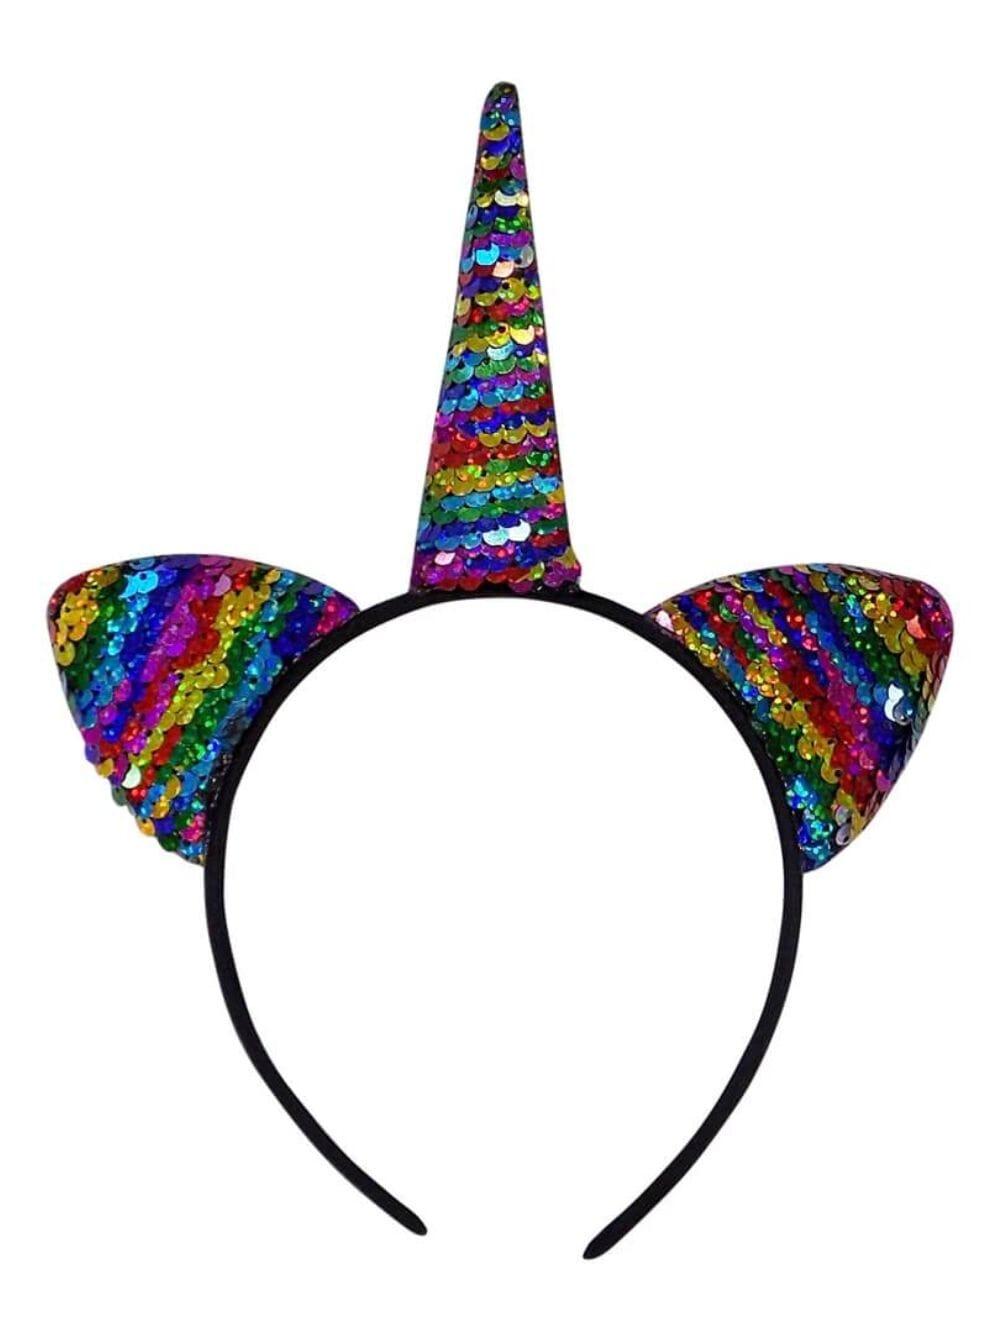 Flip Sequin Rainbow Unicorn Girls Headband Ears, Kid or Adult Size Costume Accessories - Sydney So Sweet